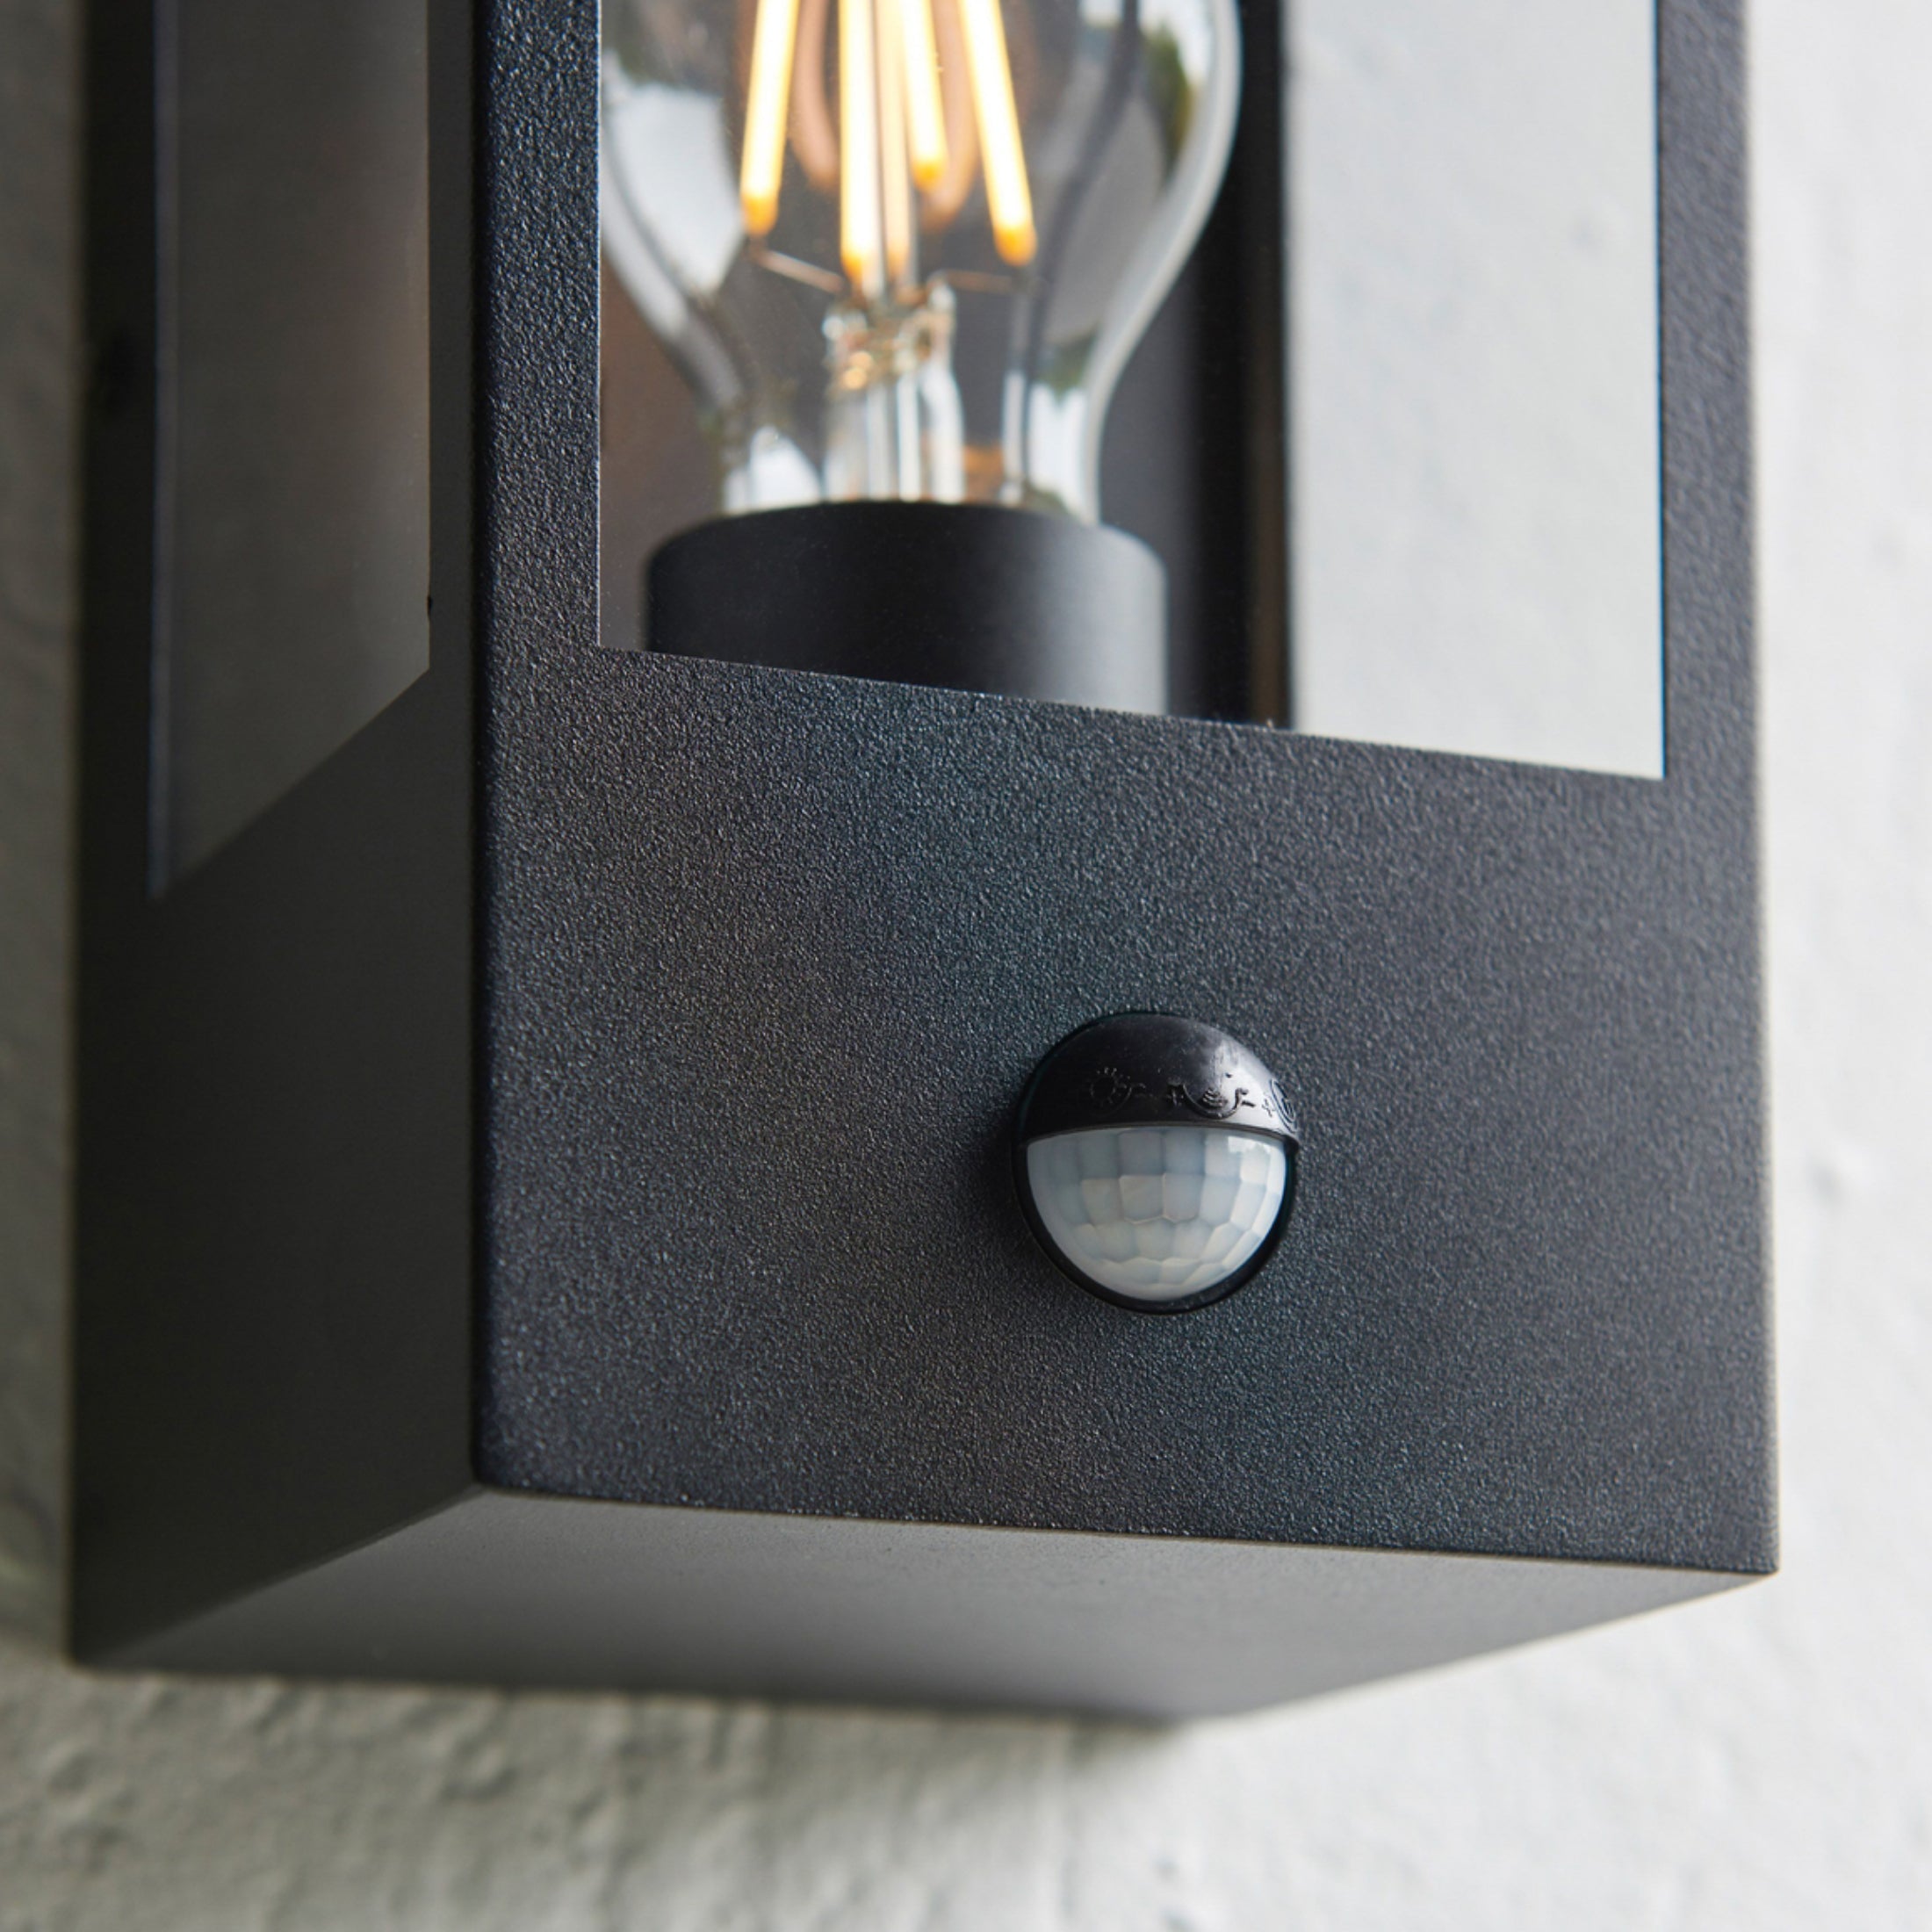 Outdoor Matt Black Box Lantern Wall Light with PIR Sensor 4